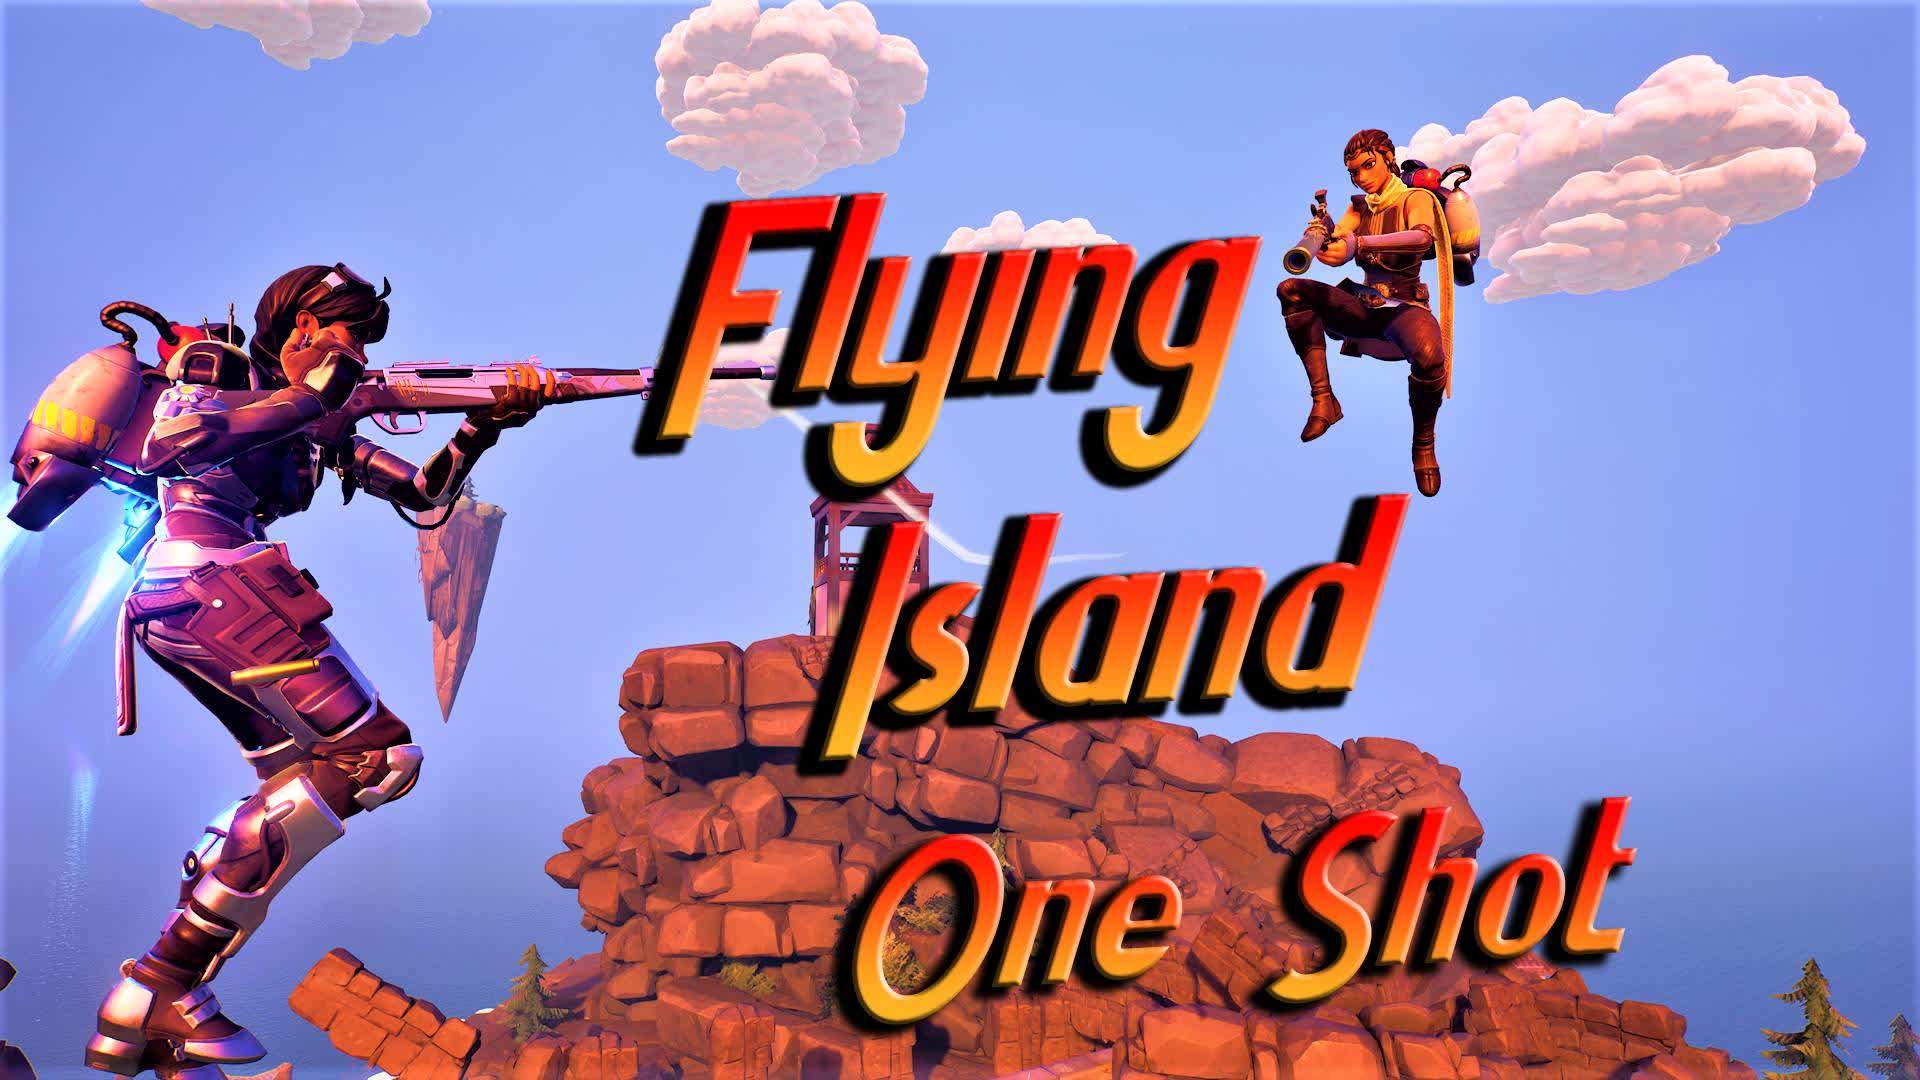 FLYING ISLAND SNIPER ONE SHOT